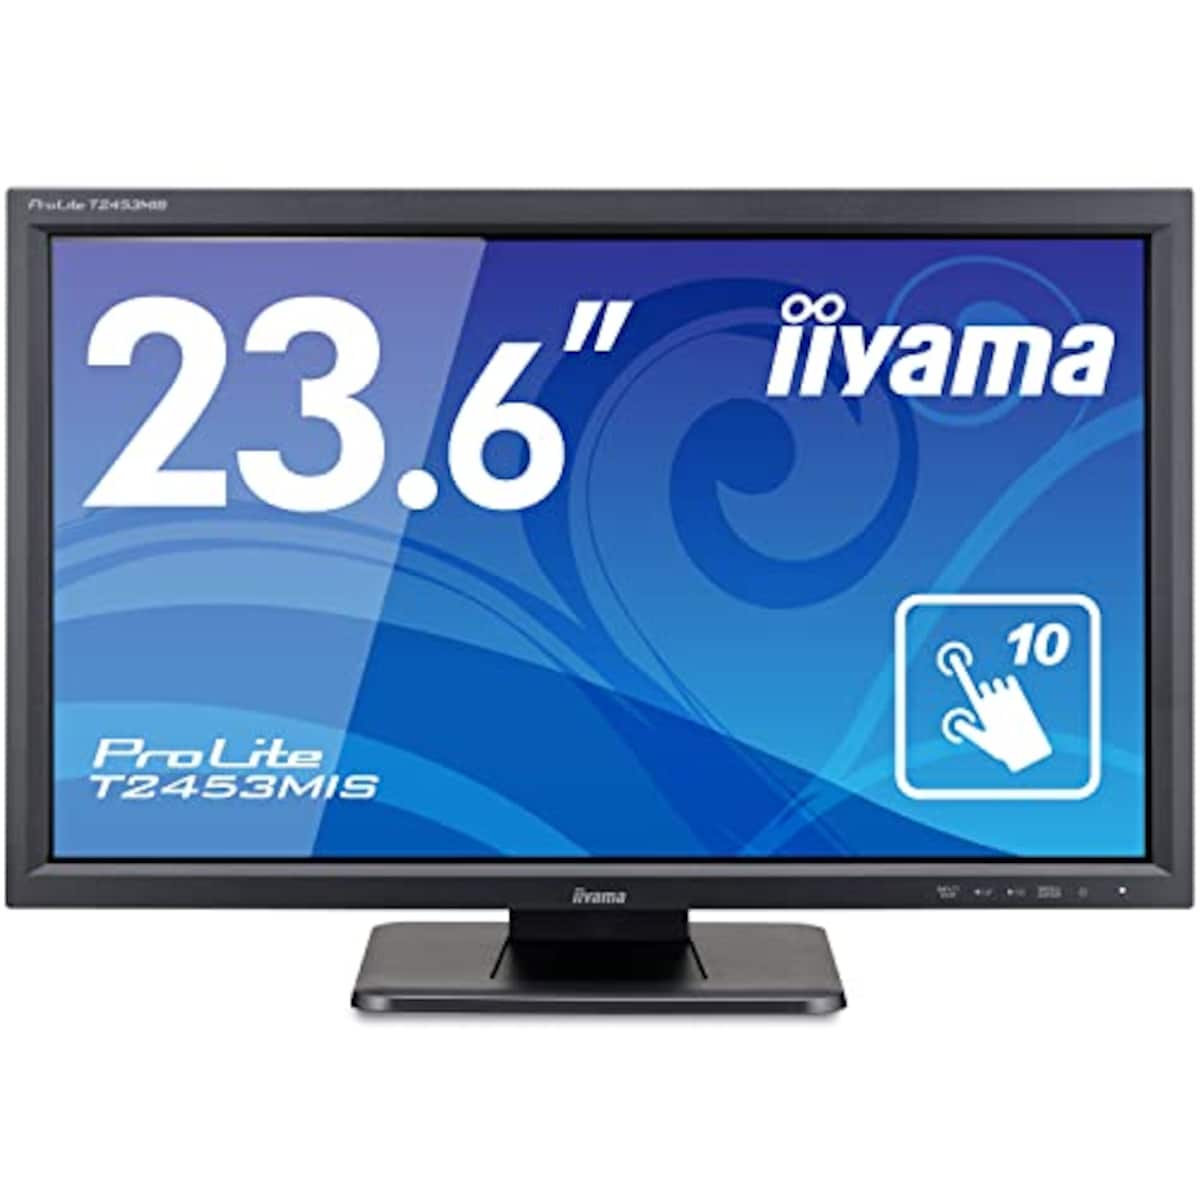 iiyama 23.6インチ タッチパネル モニター ディスプレイ HDMI DisplayPort D-sub 角度調整 全ケーブル付 3年保証 国内サポート T2453MIS-B1